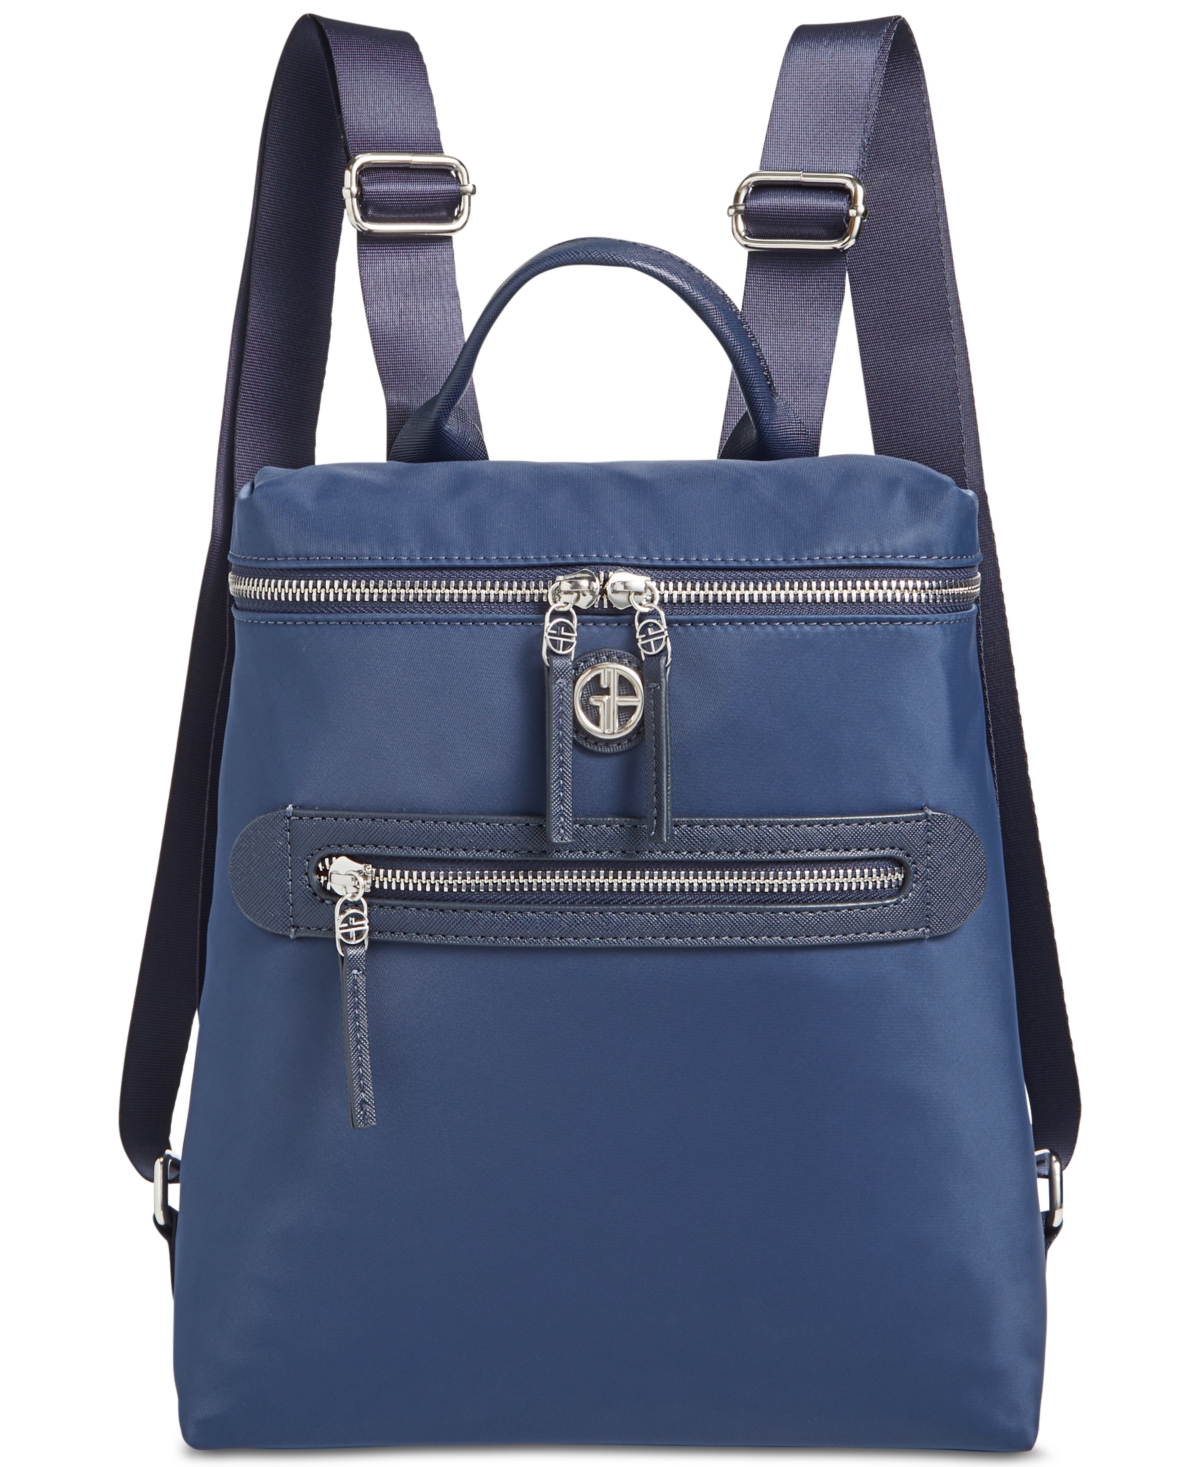 Giani Bernini Nylon Backpack, Created For Macy's In Navy